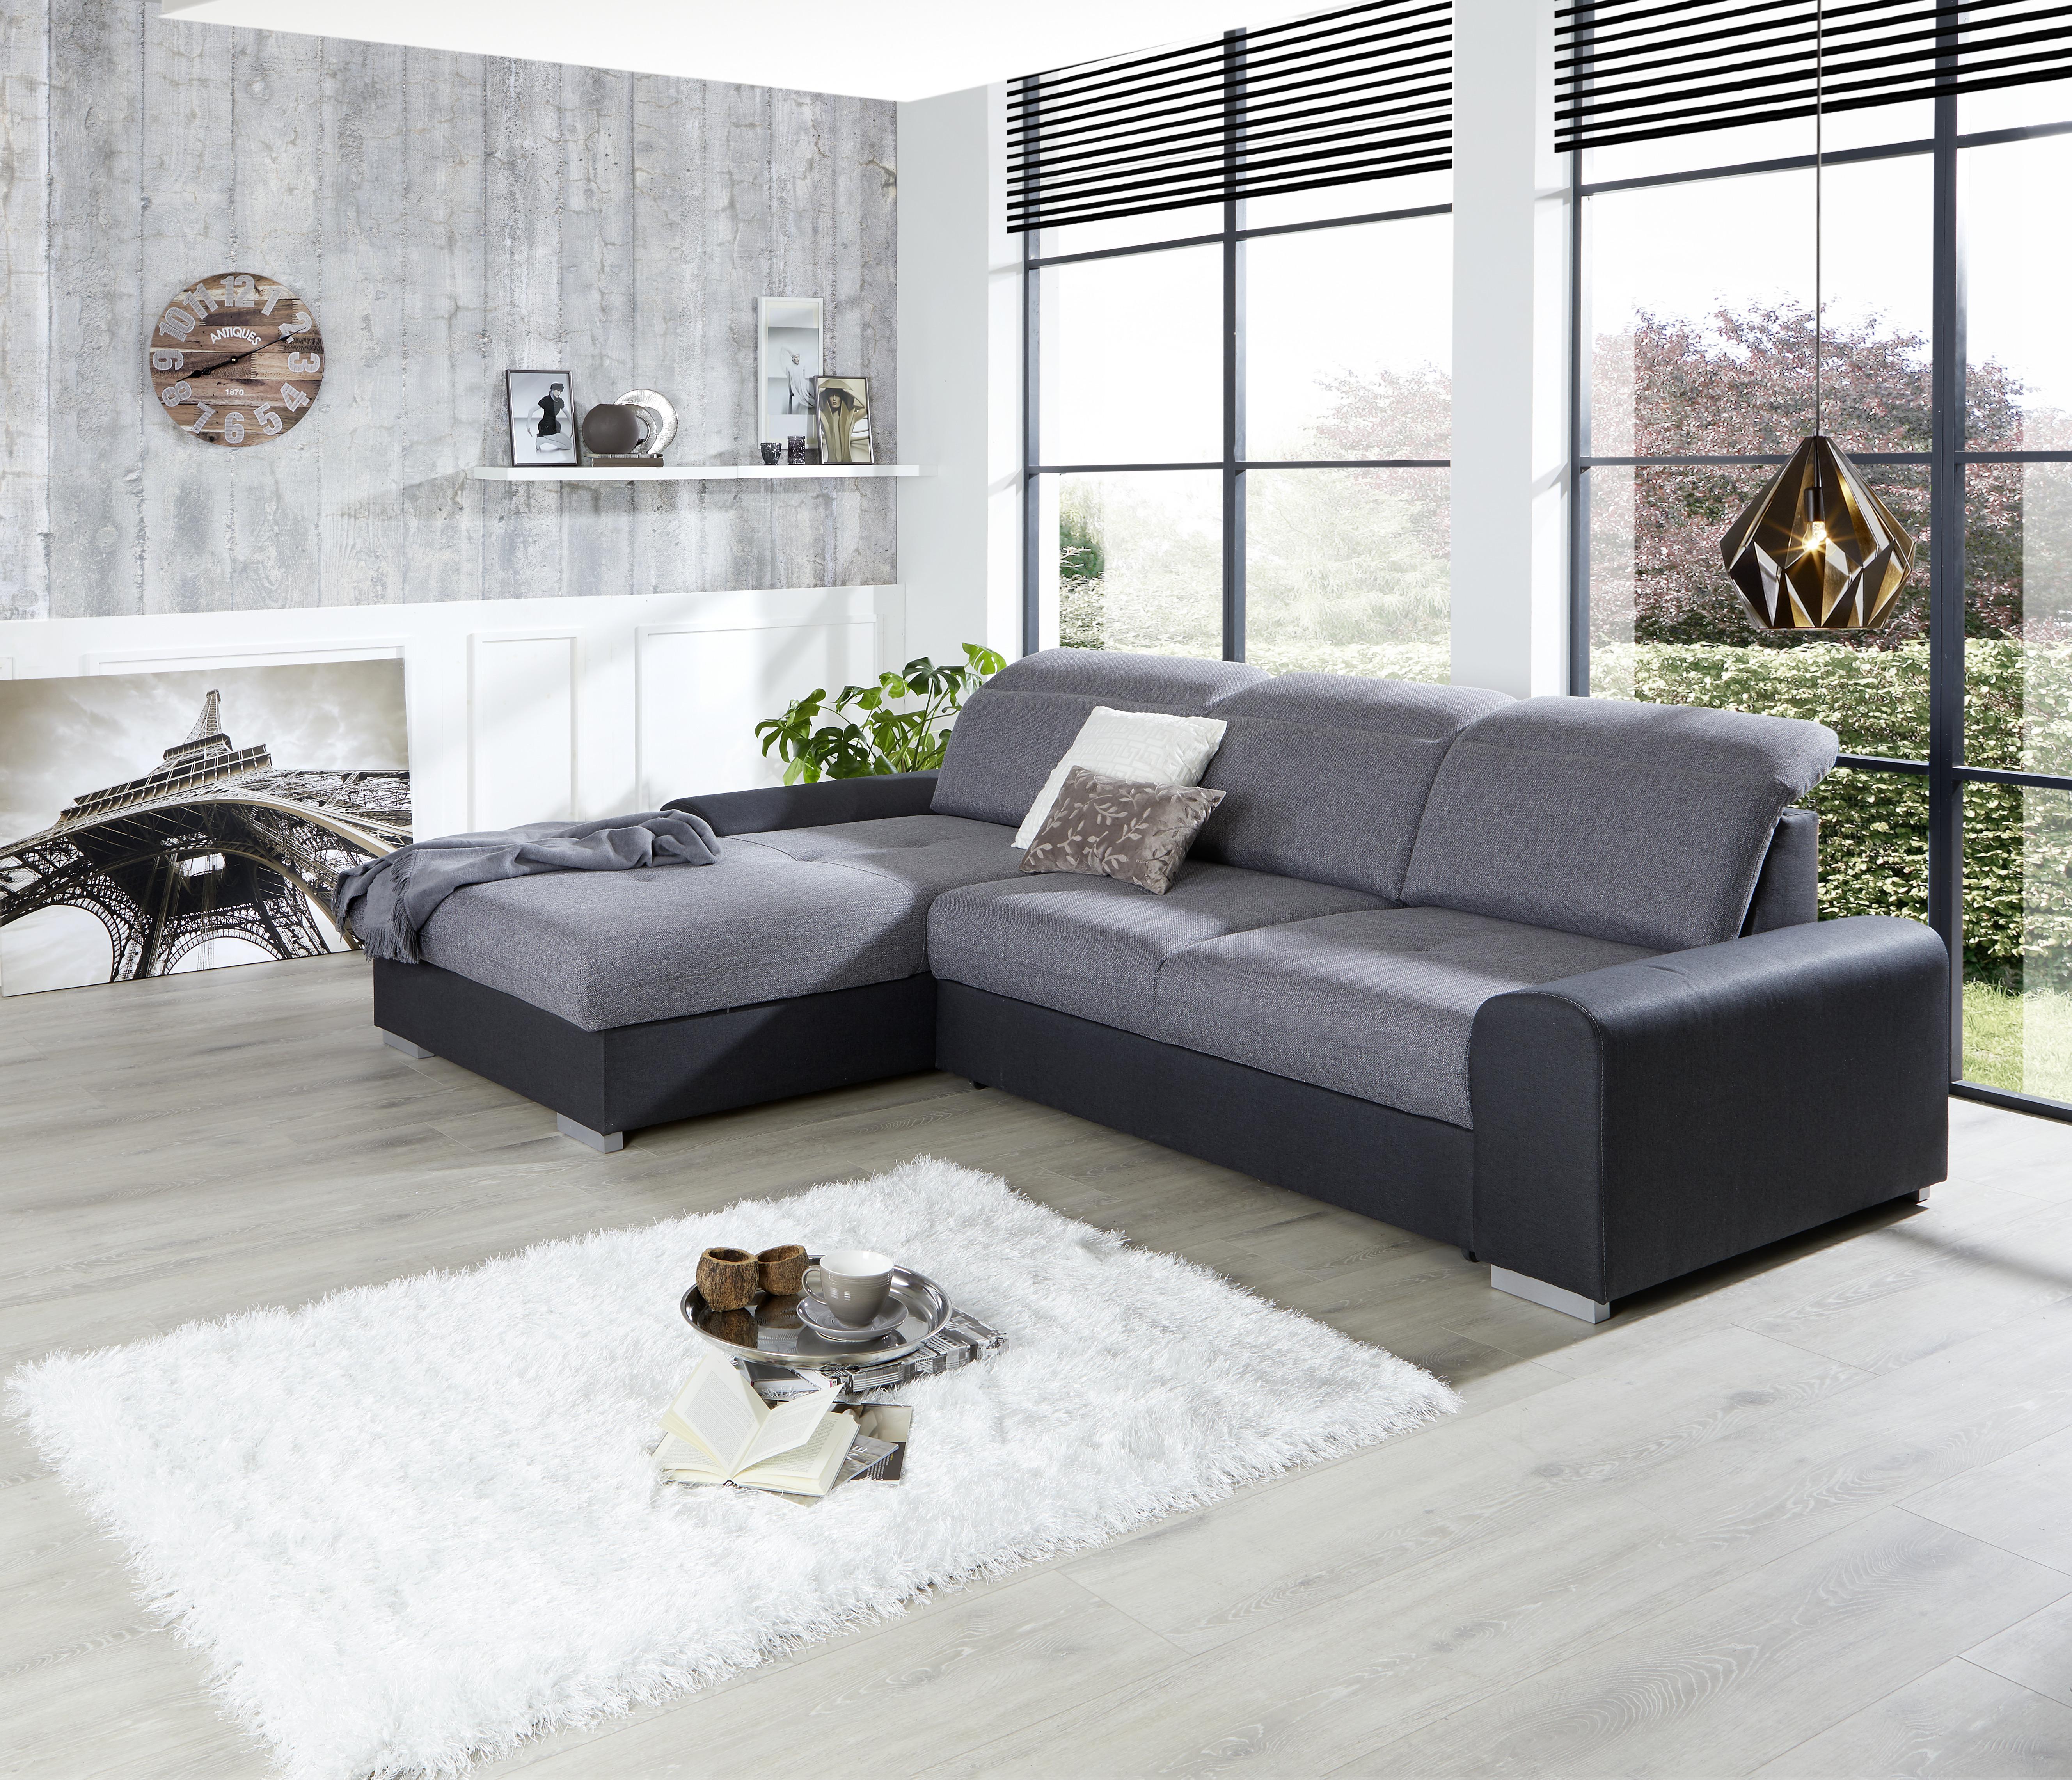 Sjedeća Garnitura Malaga - siva/boje grafita, Konventionell, tekstil/drvo (203/286cm) - Modern Living